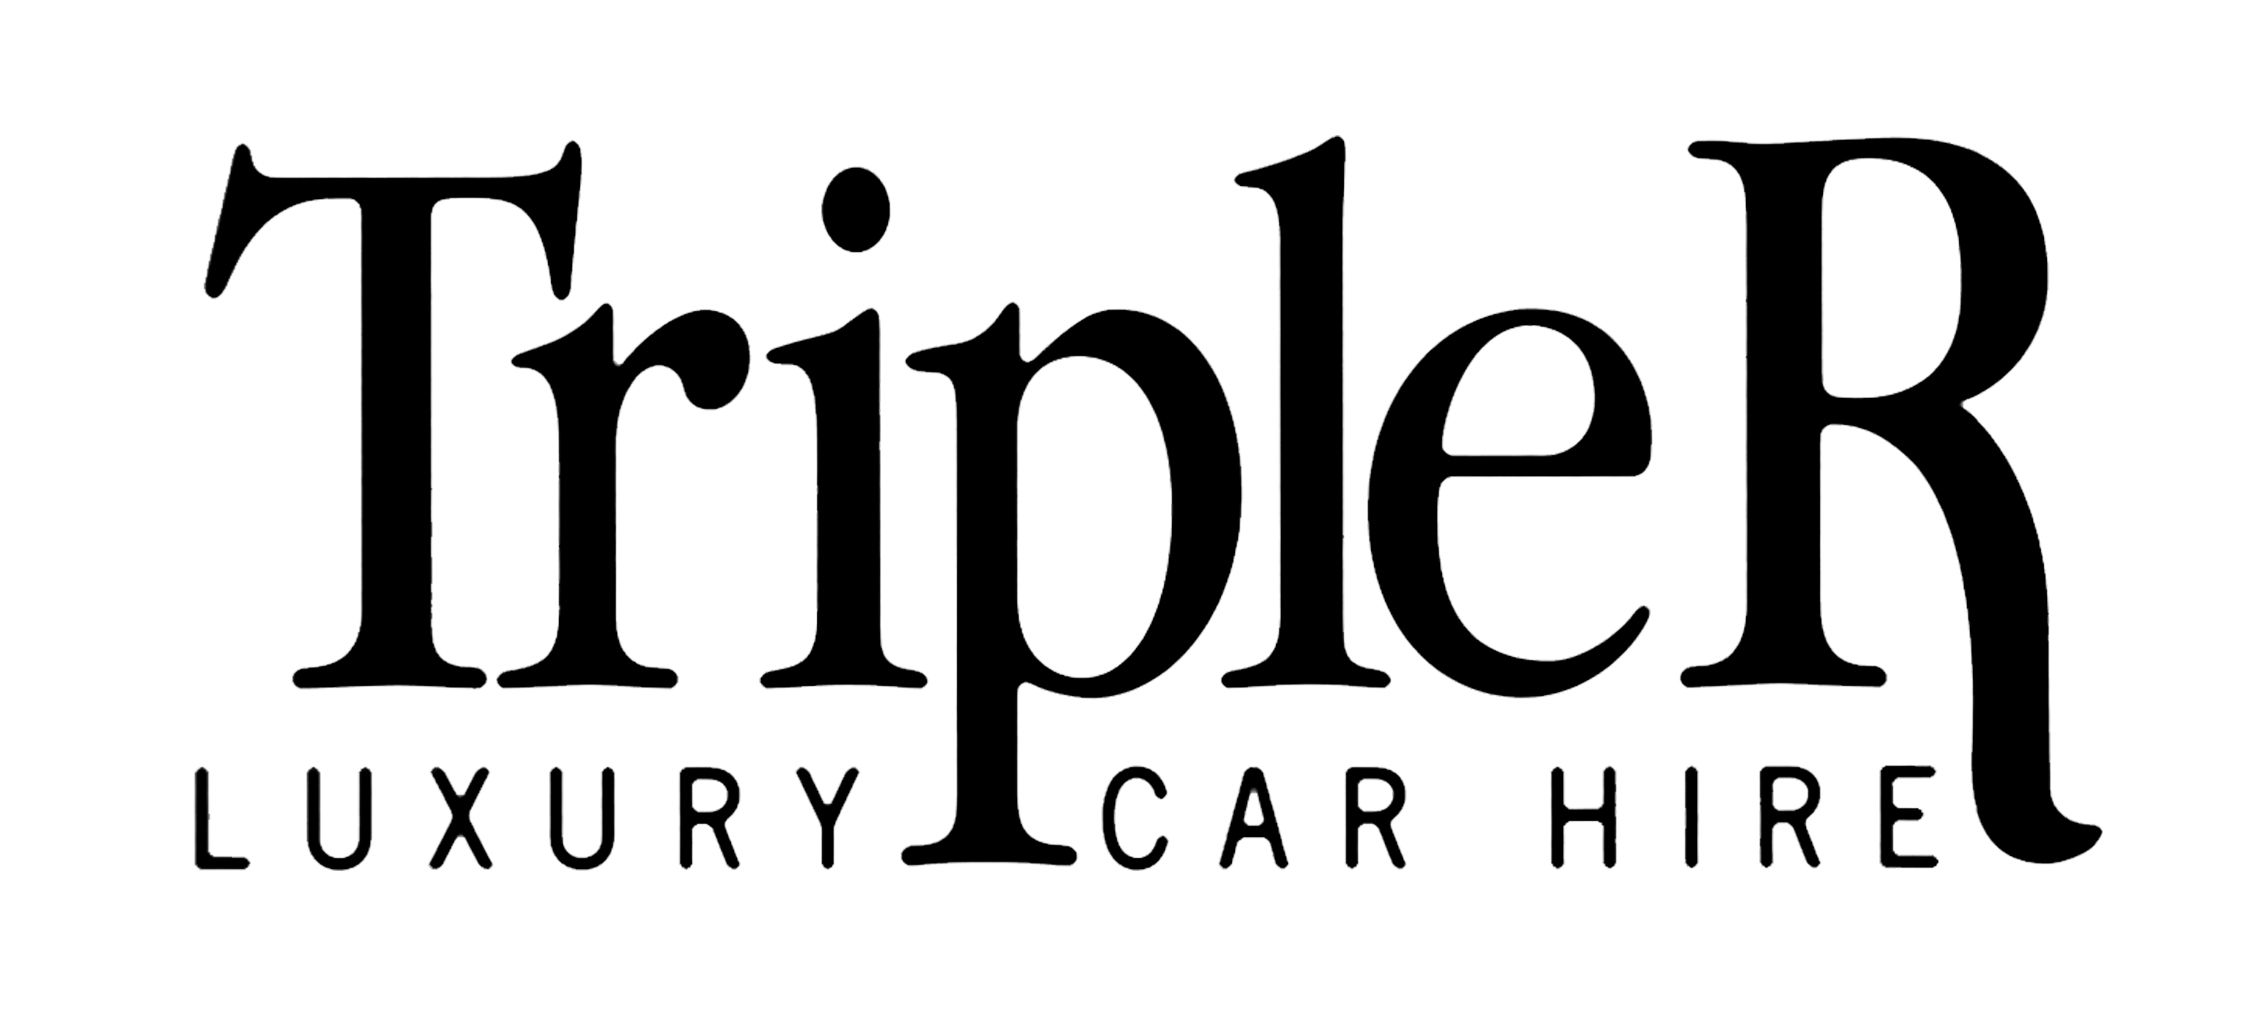 Triple R Luxury Car Hire